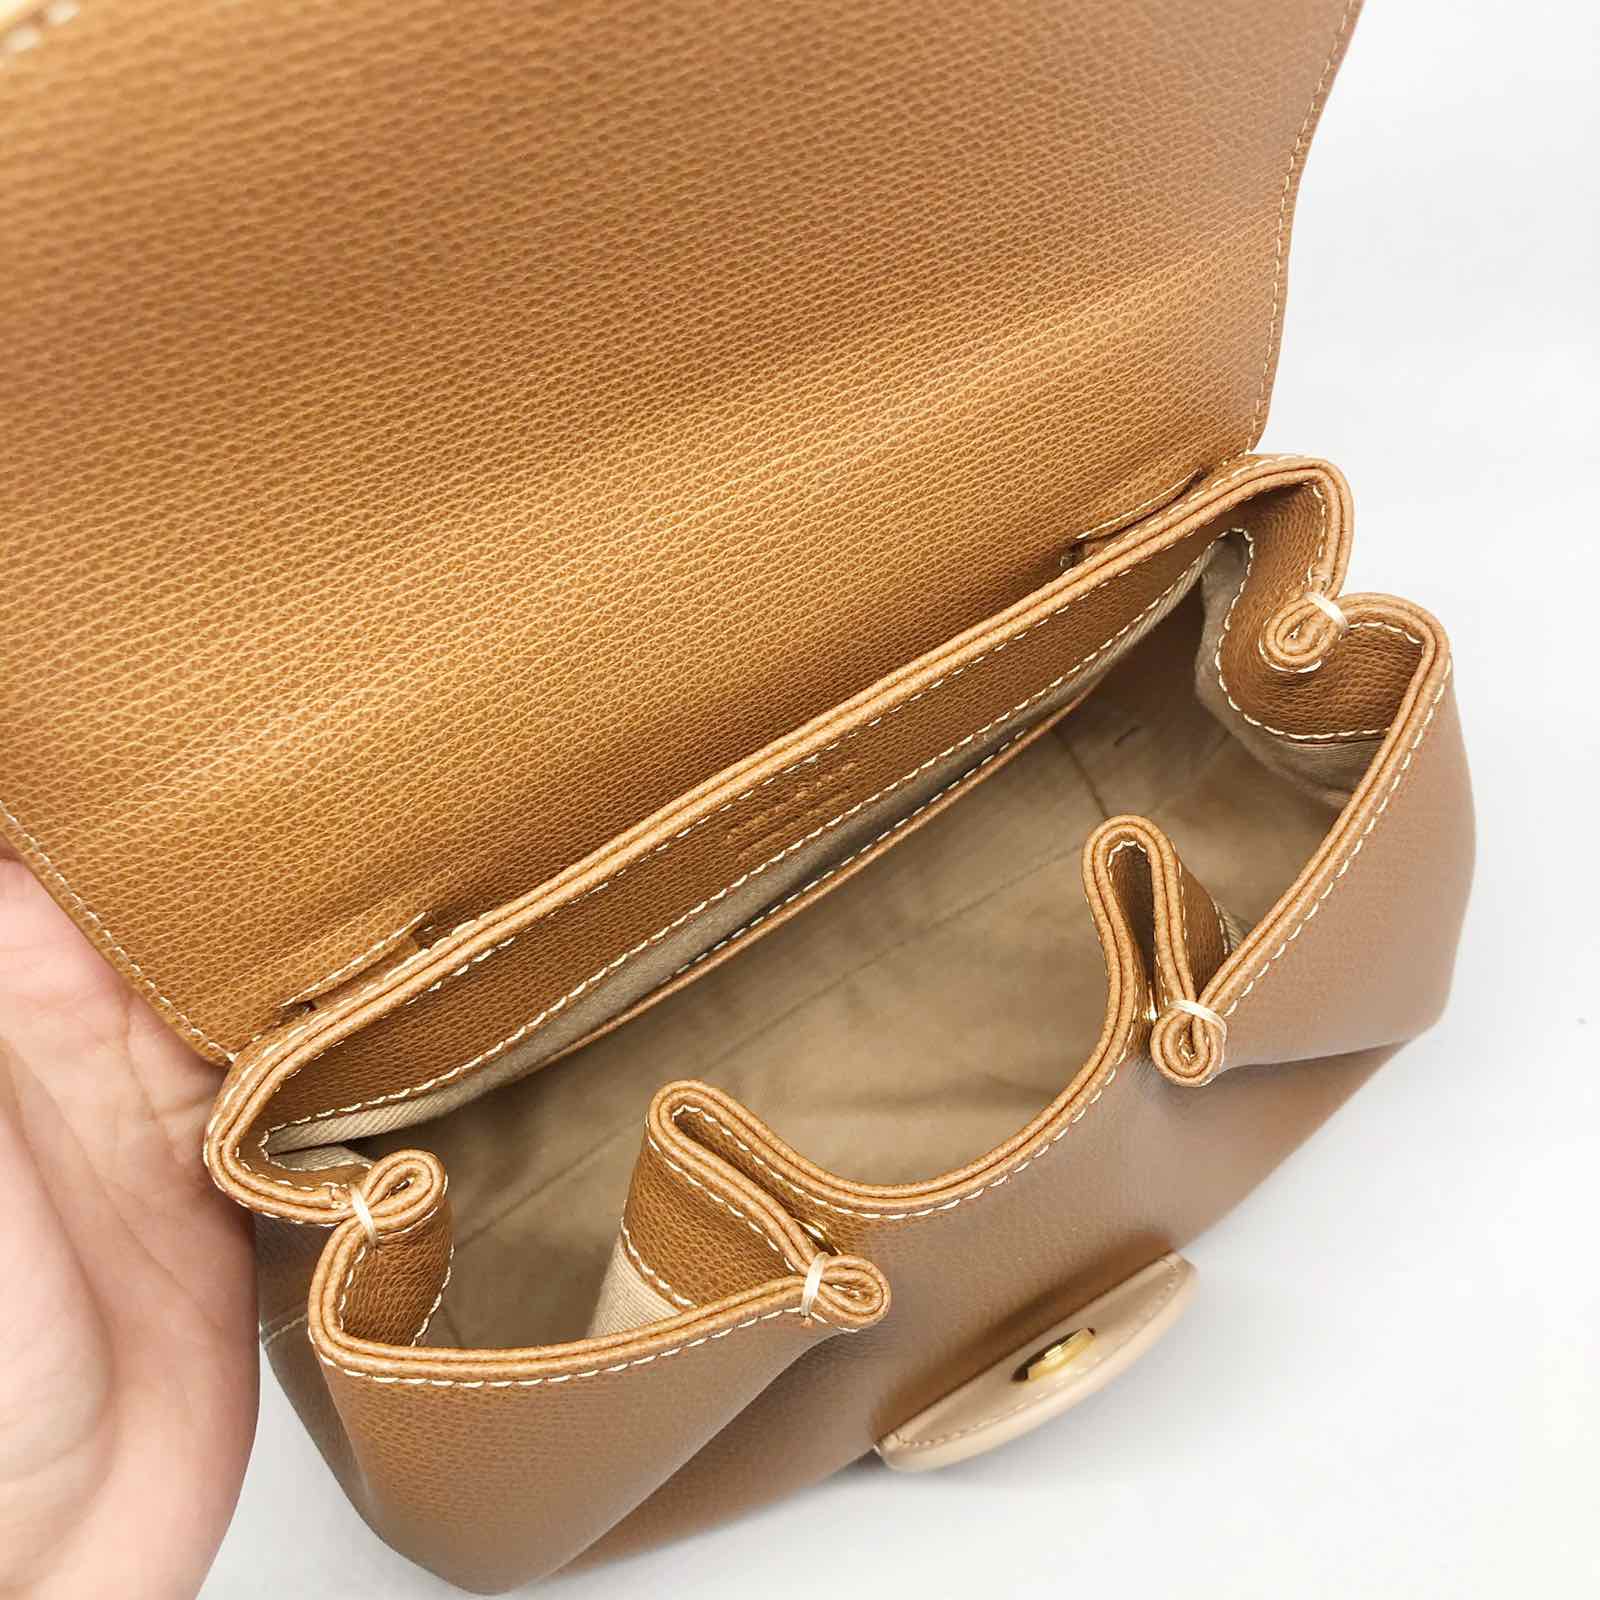 Polène  Bag - Numéro Un Nano - Trio Camel Textured Leather